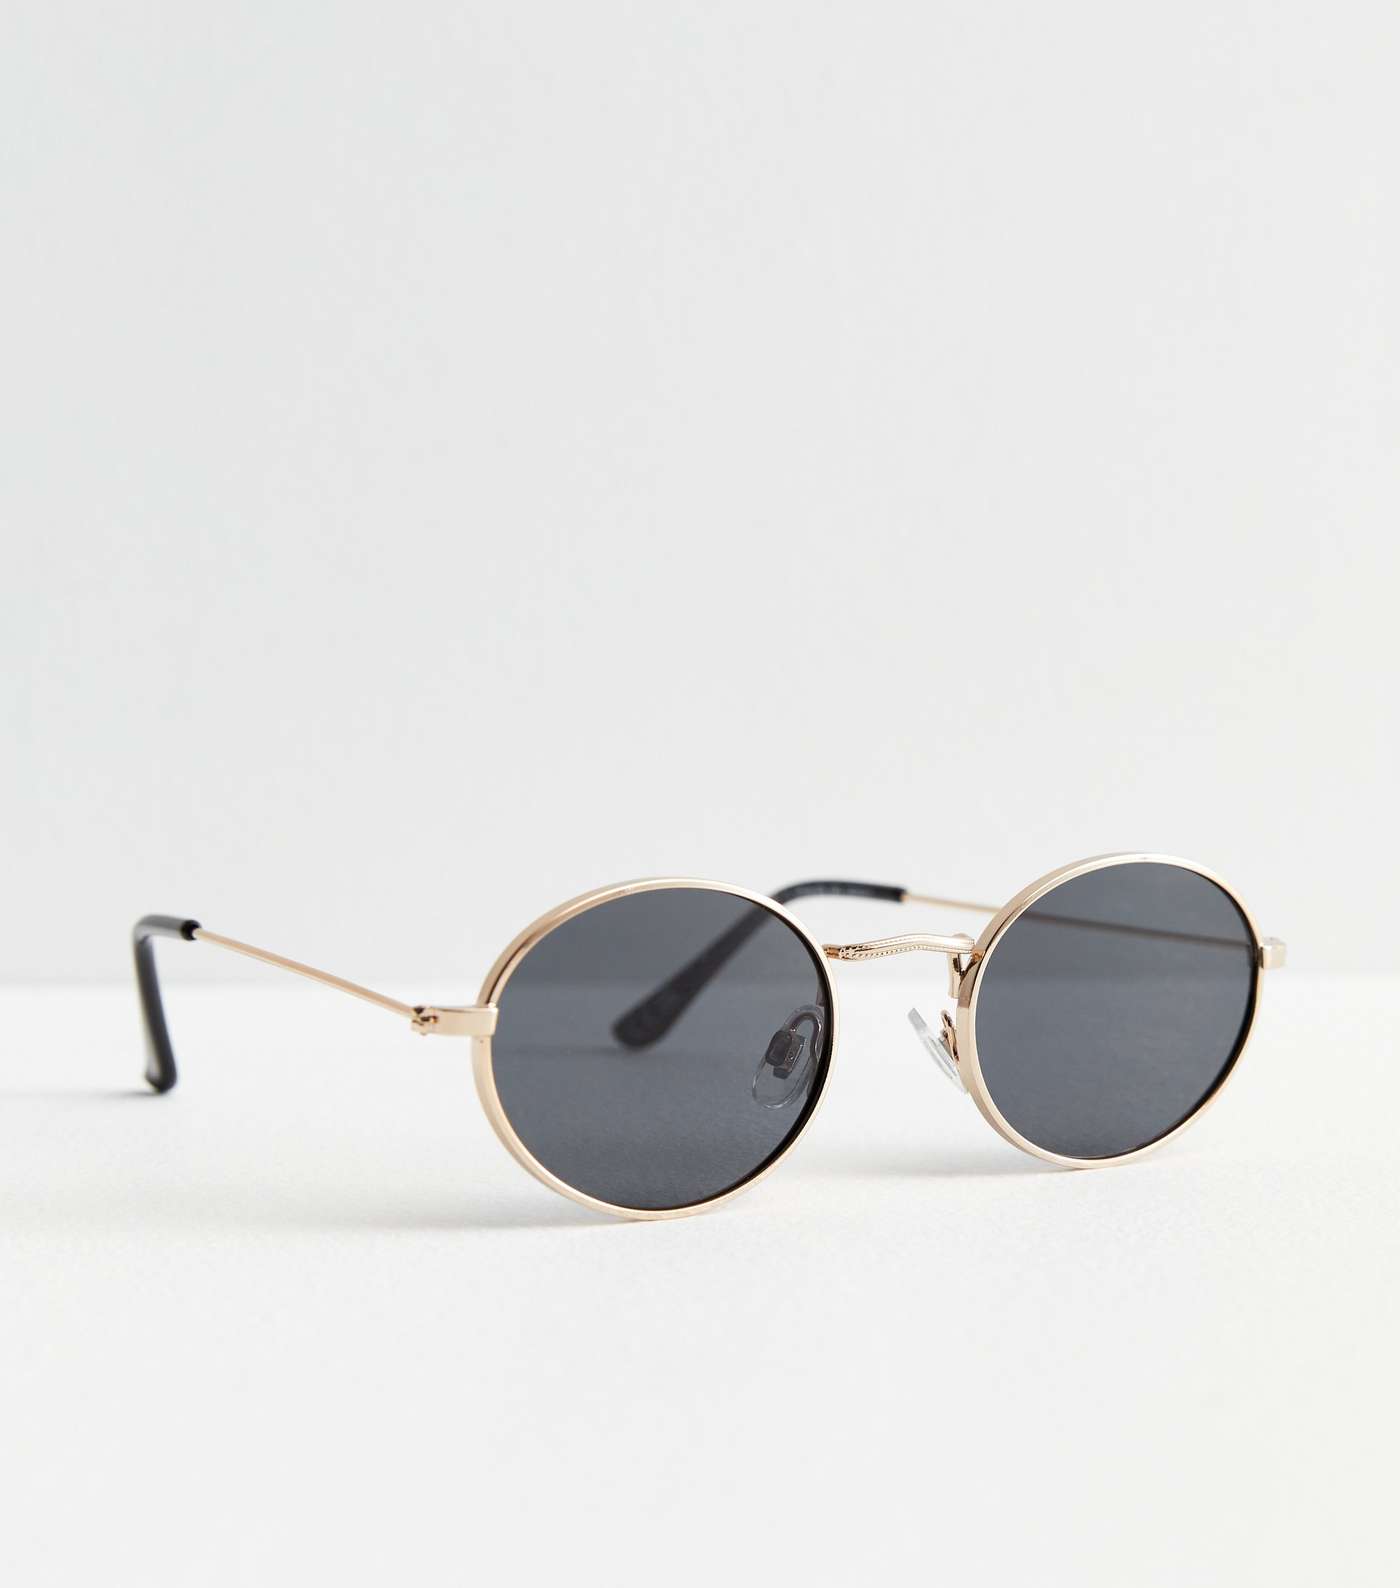 Gold Metal Round Frame Sunglasses Image 2